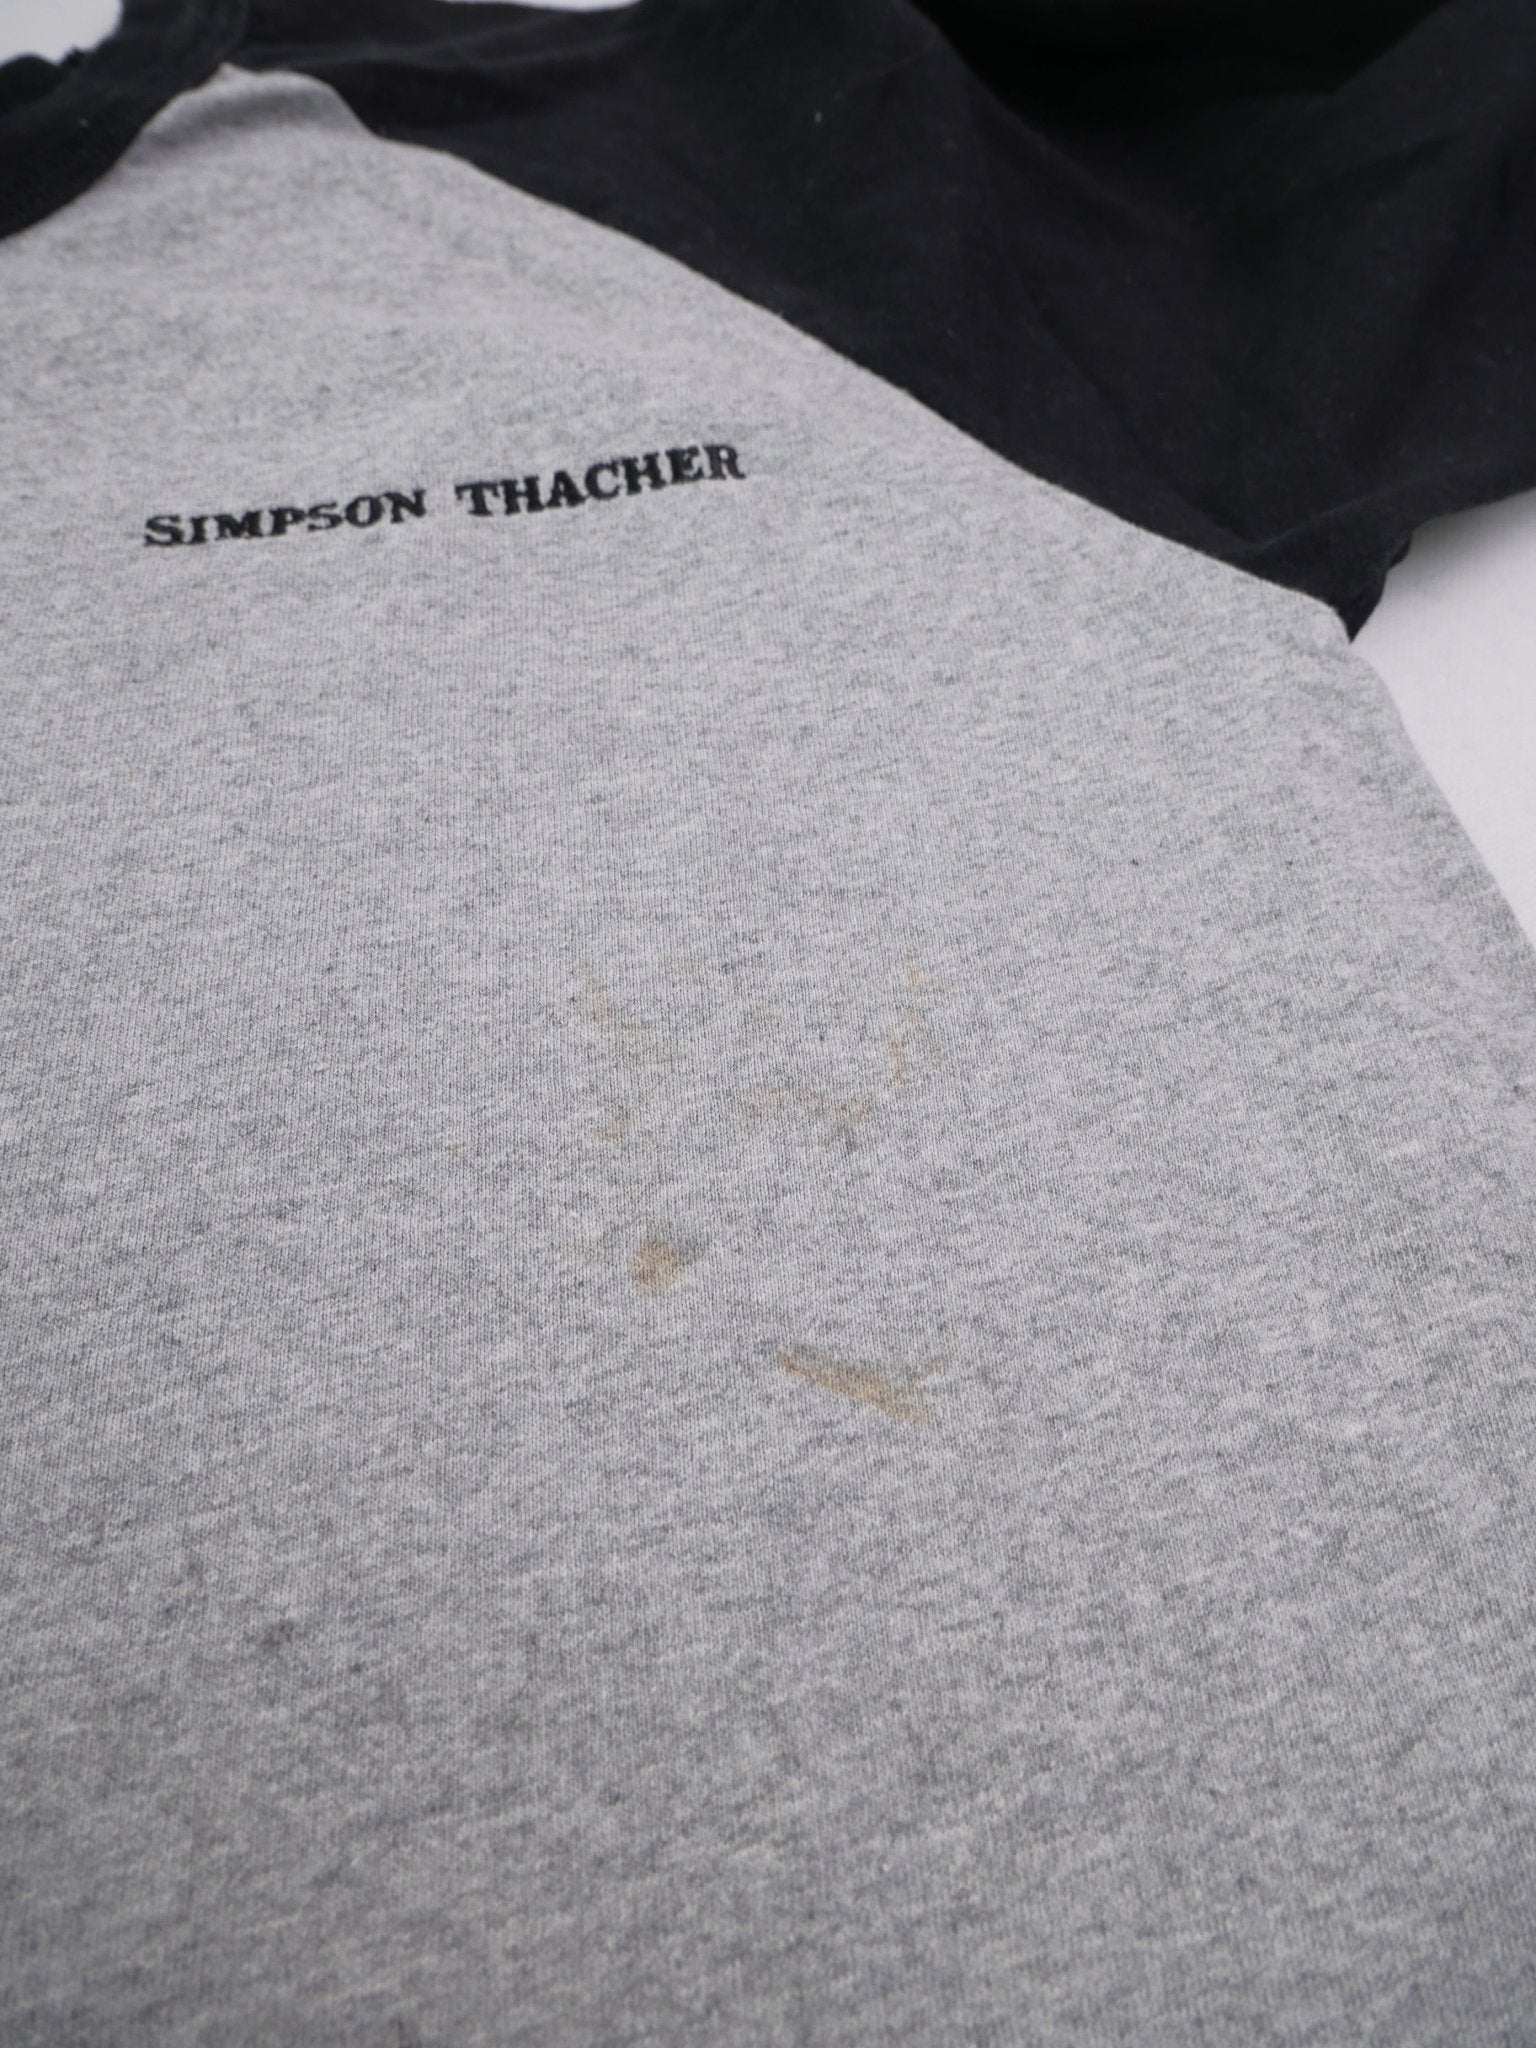 Champion Simpson Thacher embroidered Logo two toned Polo Shirt - Peeces